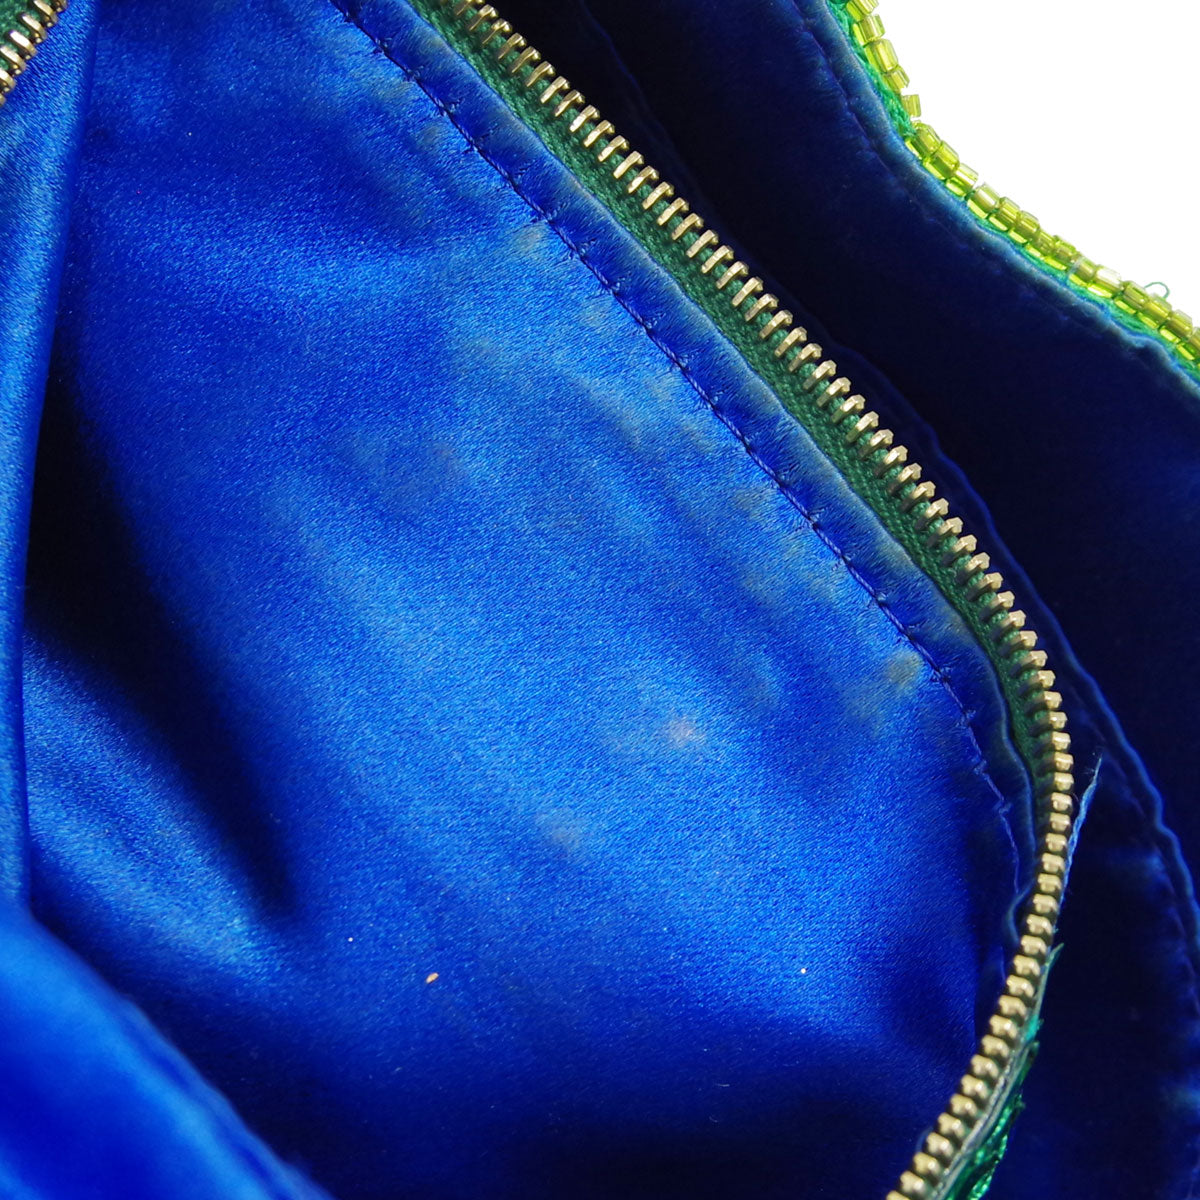 Fendi Baguette Bag - Metallic Shoulder Bags, Handbags - FEN287787